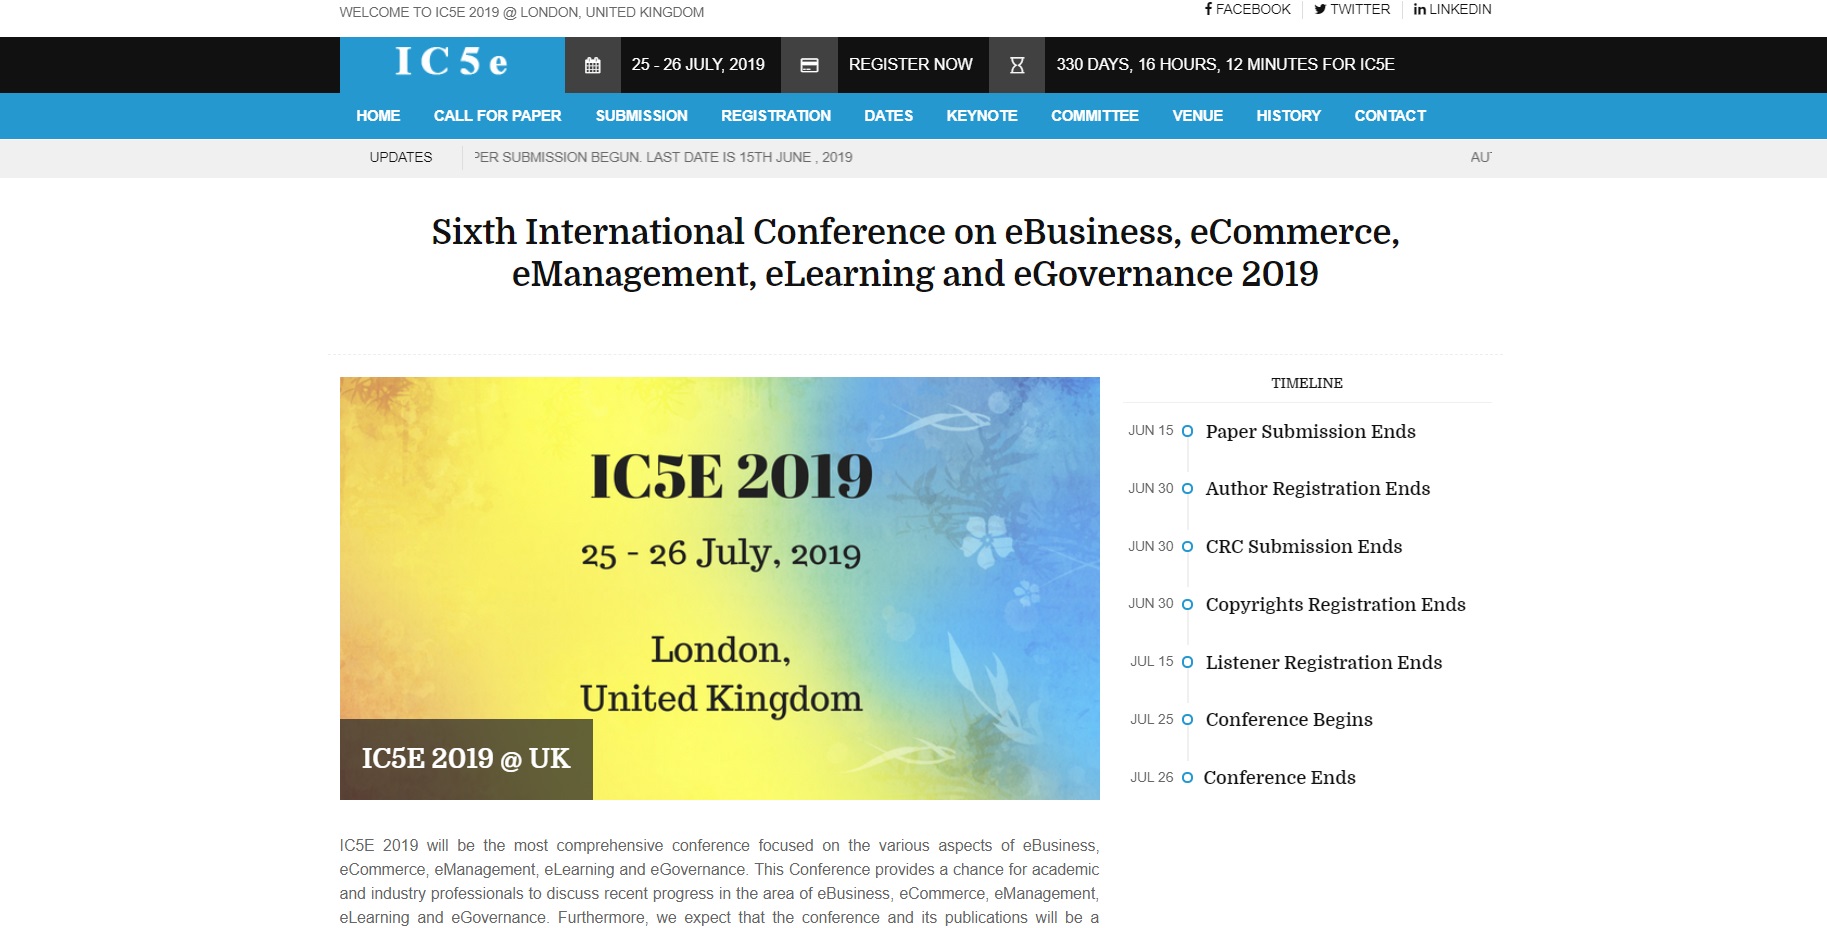 Sixth International Conference on eBusiness, eCommerce, eManagement, eLearning and eGovernance 2019, London, United Kingdom